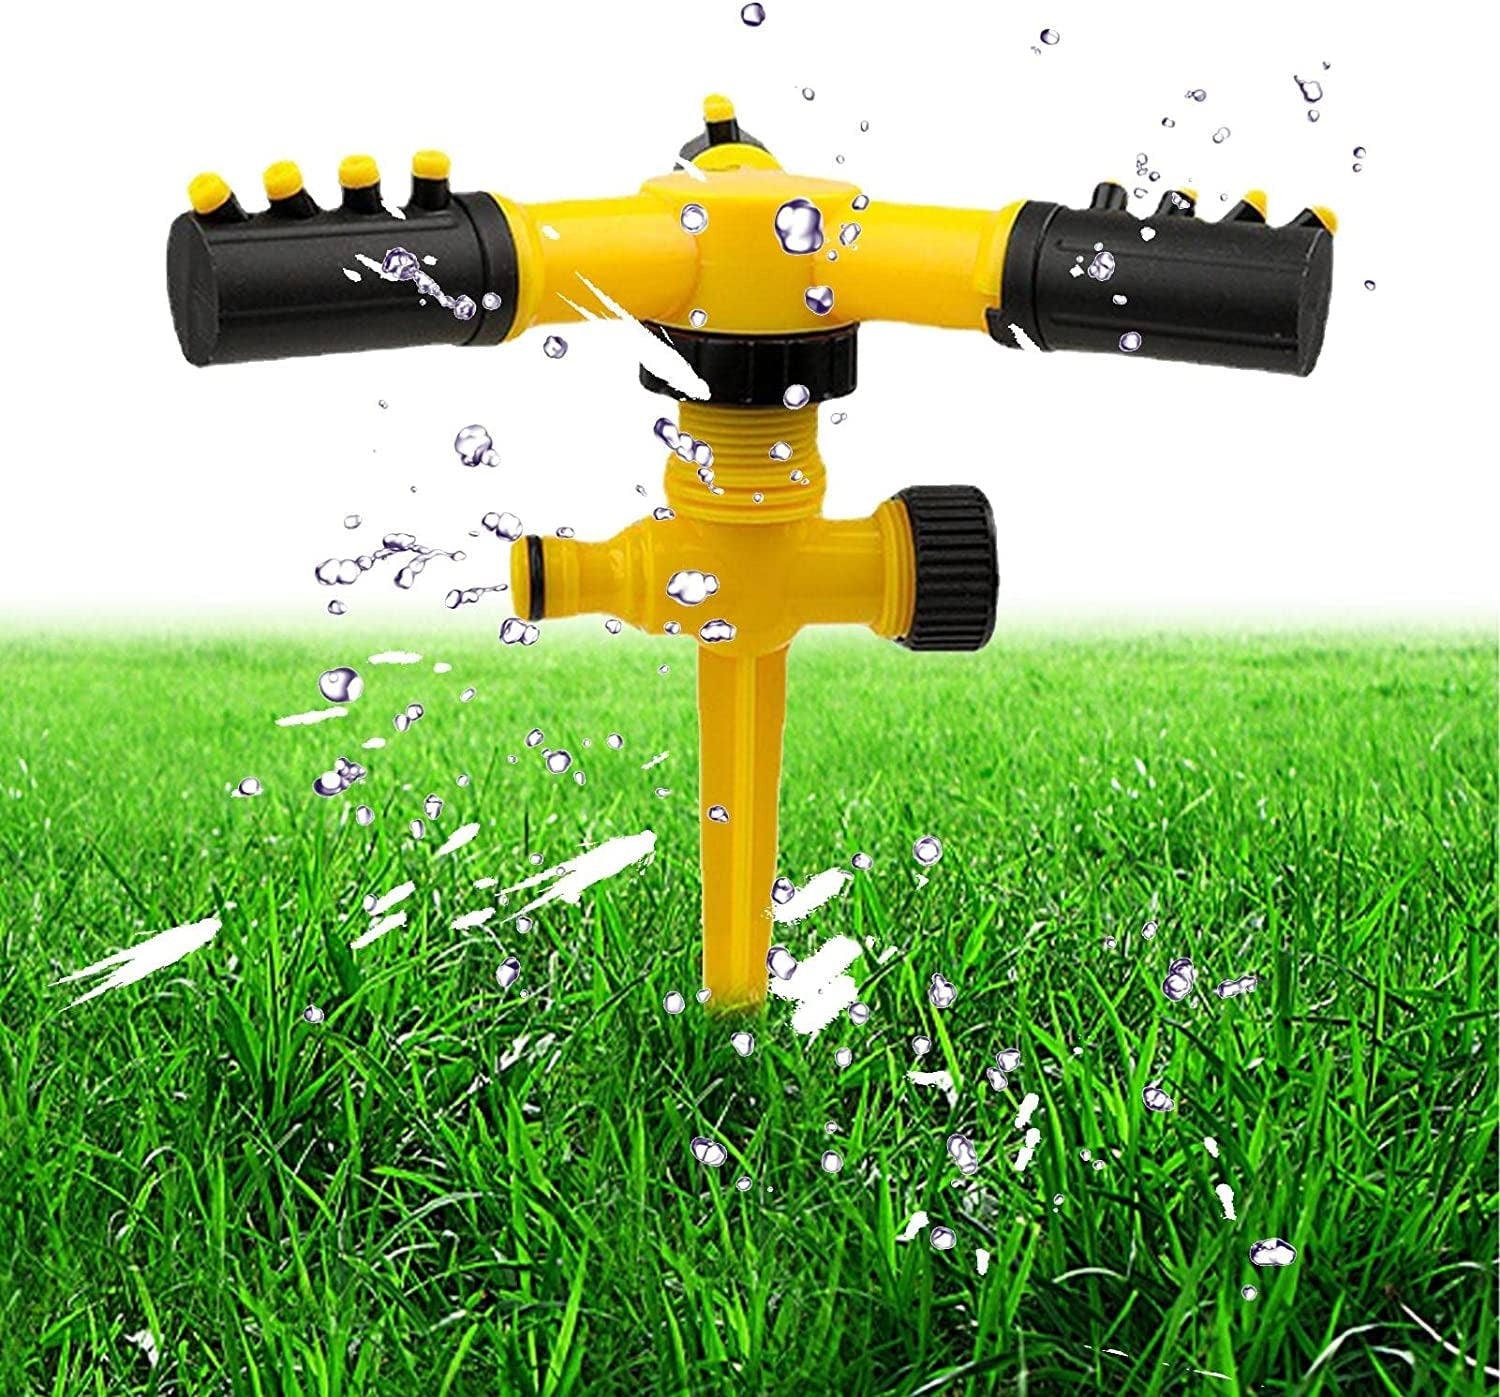 Sprinklers Water with 3 Nozzles Lawn Sprinklers 360 Degree 3 Arm Rotating Sprinkler System Sprinkler Garden Irrigation Tool for Yard, Lawn Garden - JVJ Prime